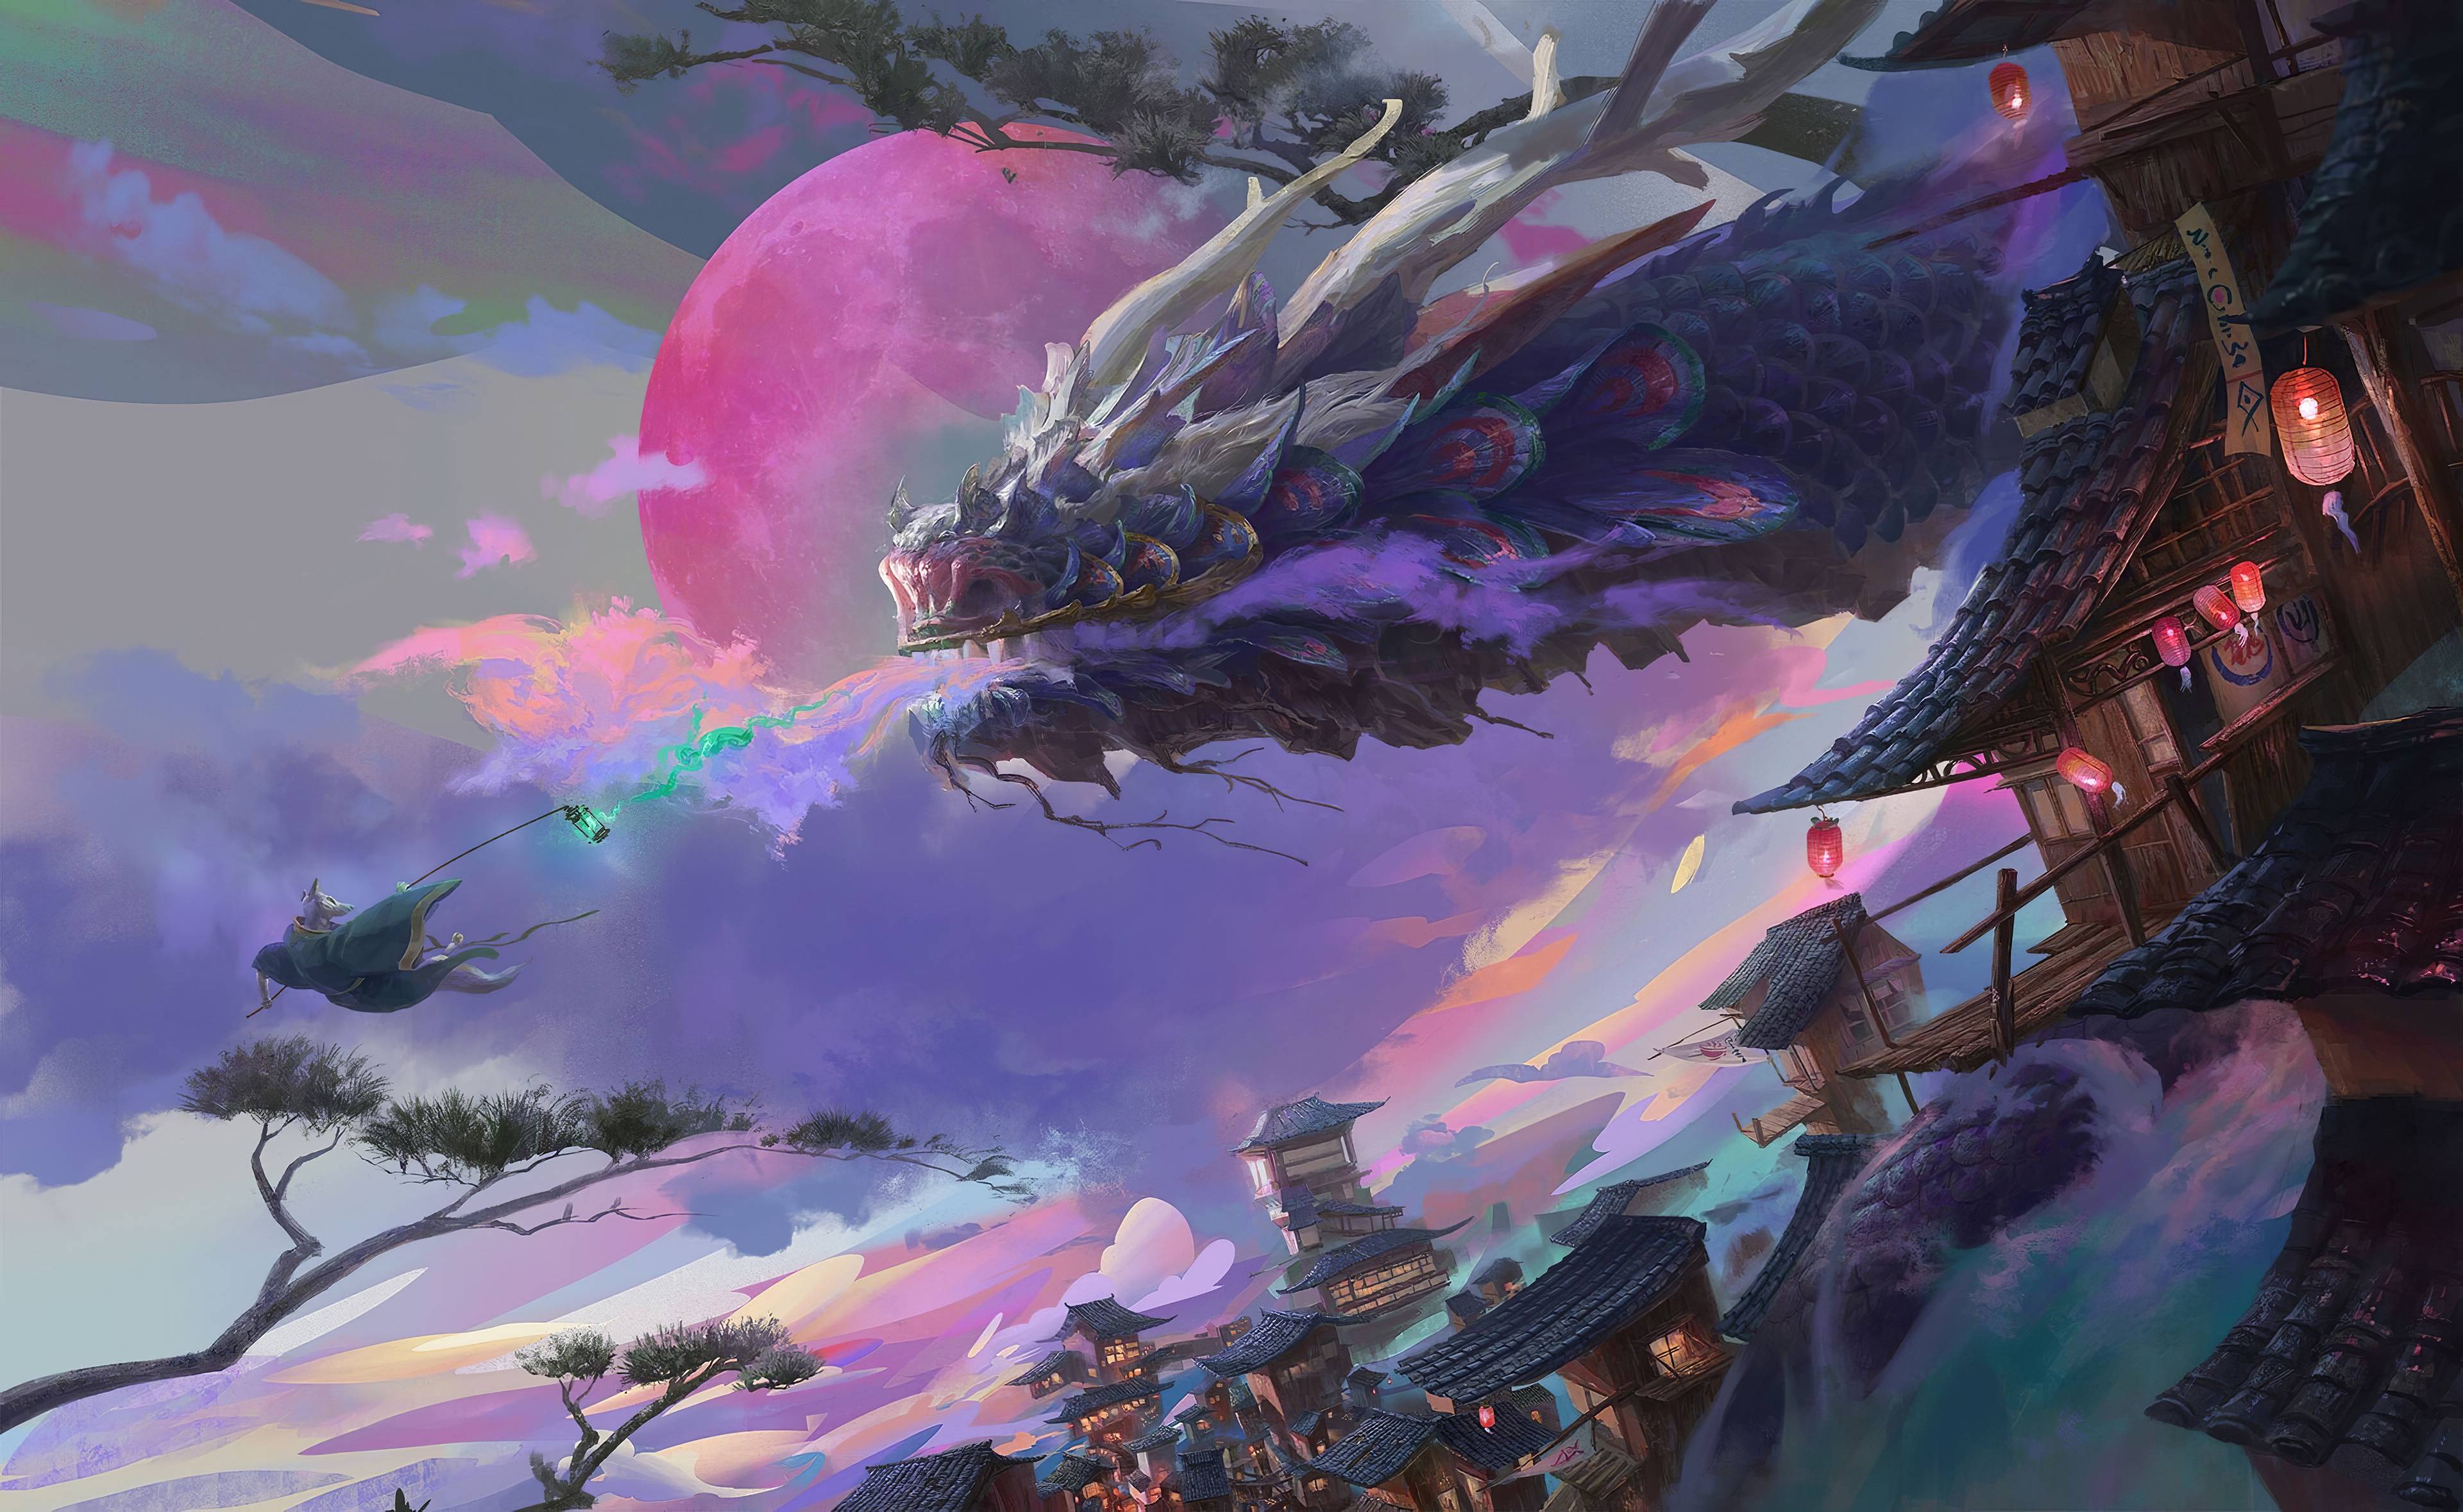 Sleeping Dragon Wallpapers - Top Free Sleeping Dragon Backgrounds ...